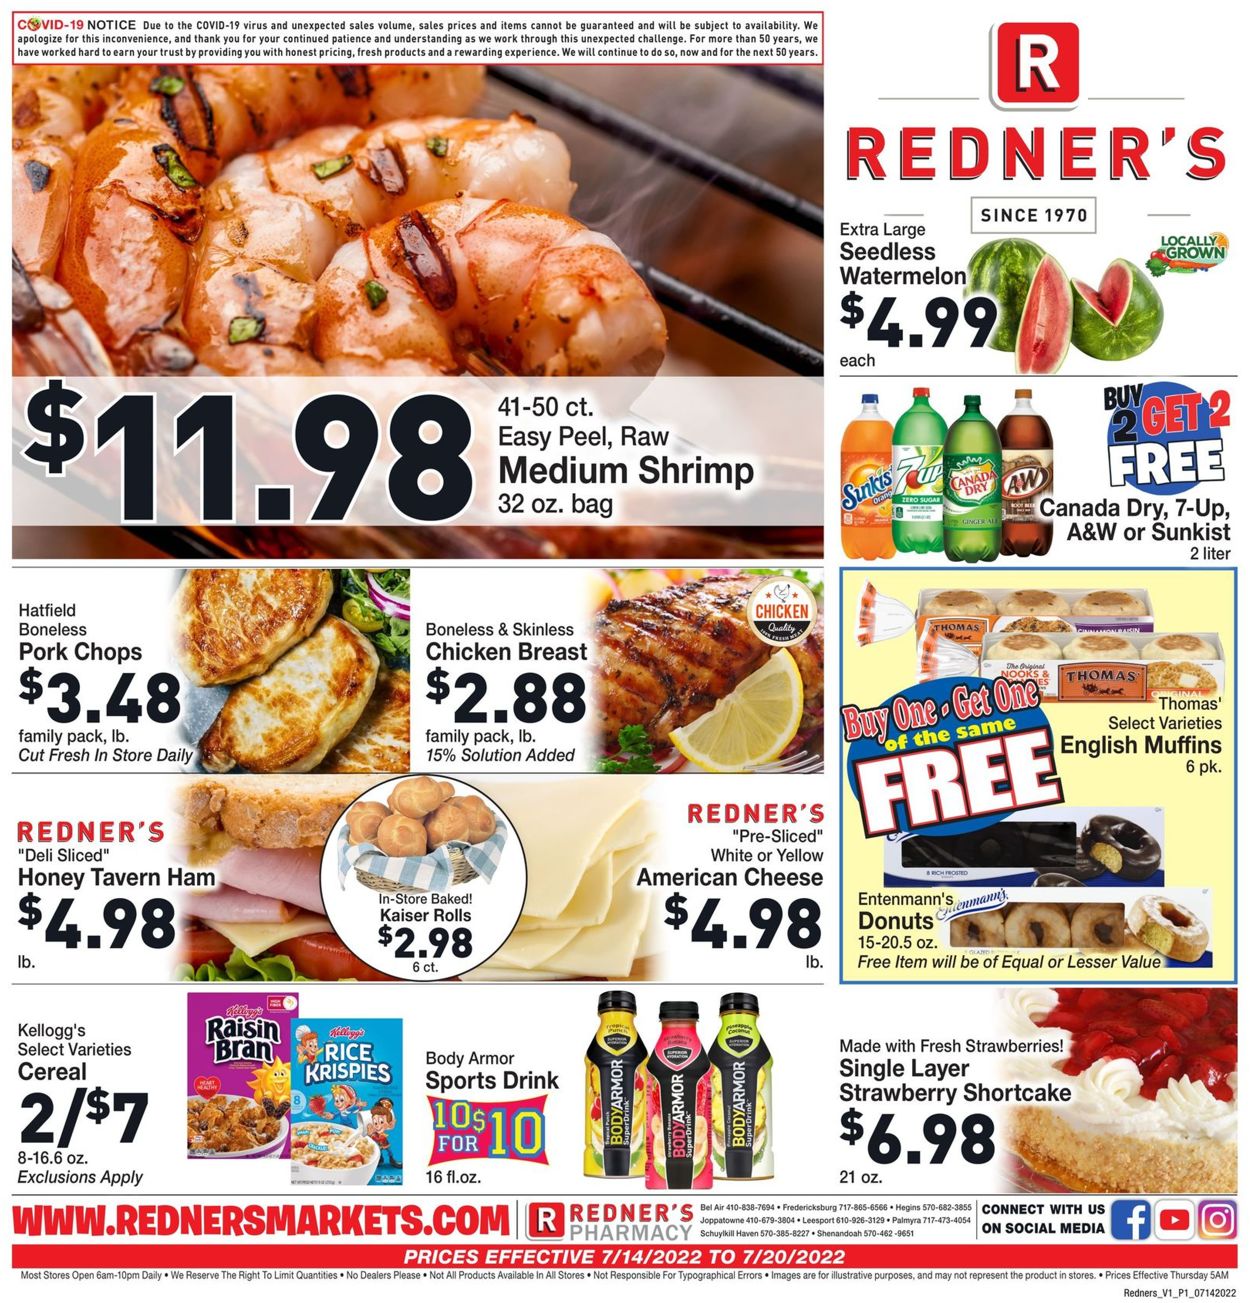 Redner’s Warehouse Market Ad from 07/14/2022